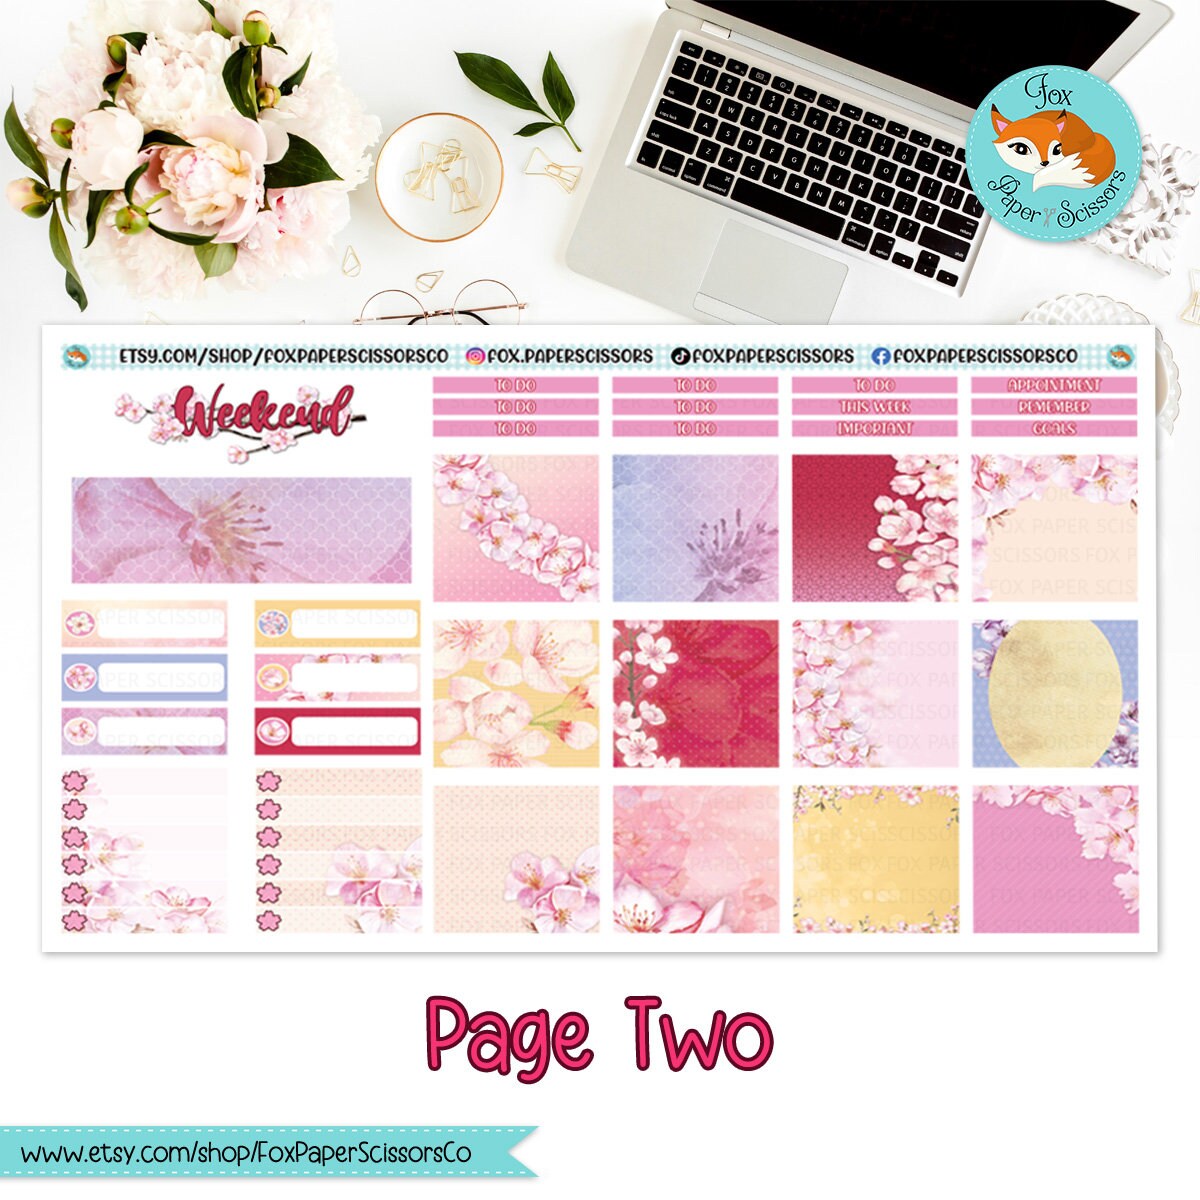 Cherry Blossom/Sakura | Hobonichi Cousin Weekly Planner Sticker Kit